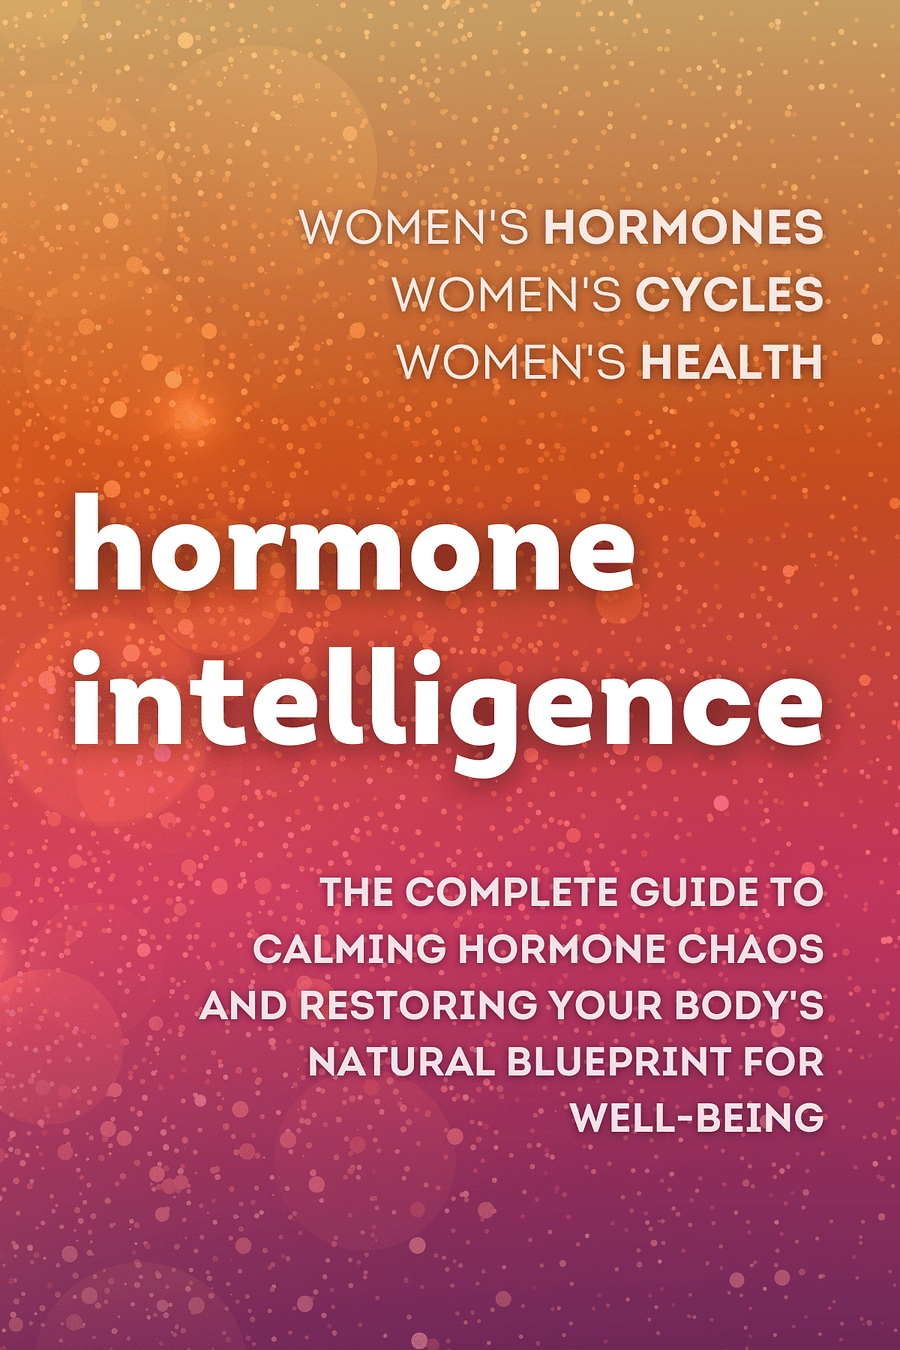 Hormone Intelligence by Aviva Romm - Book Summary